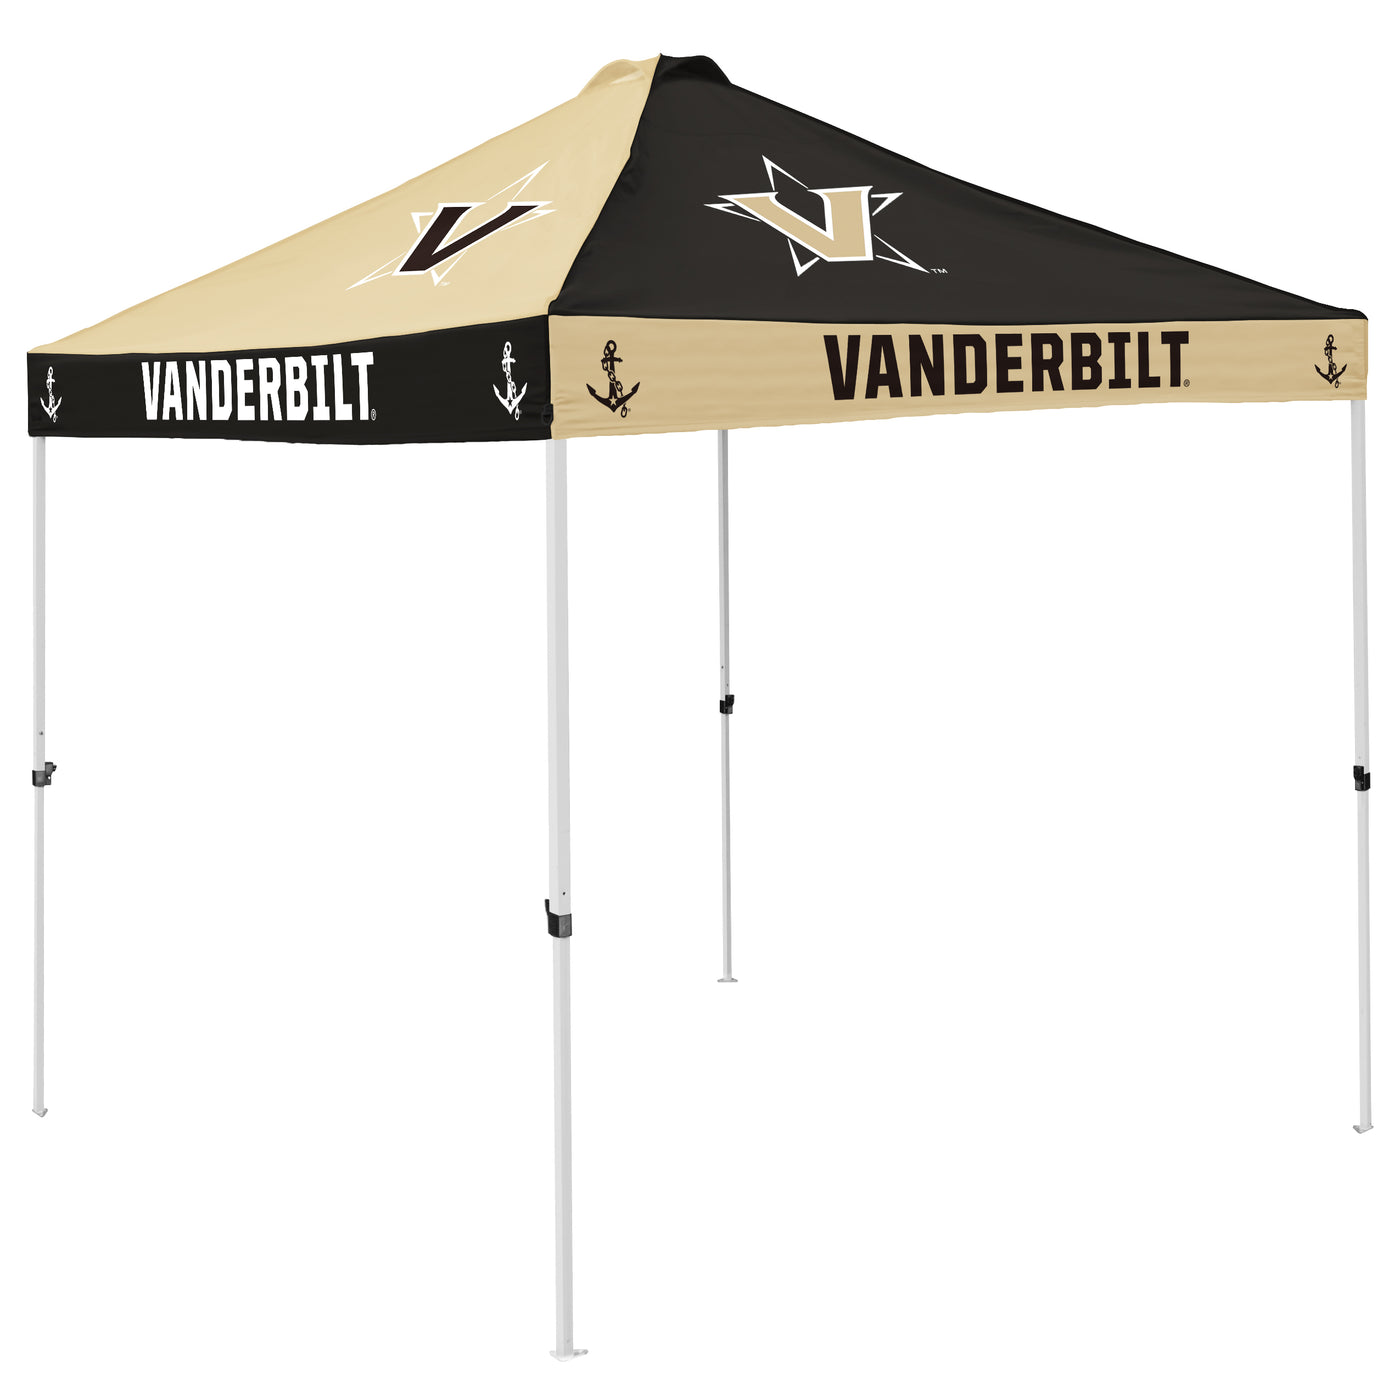 Vanderbilt Checkerboard Canopy